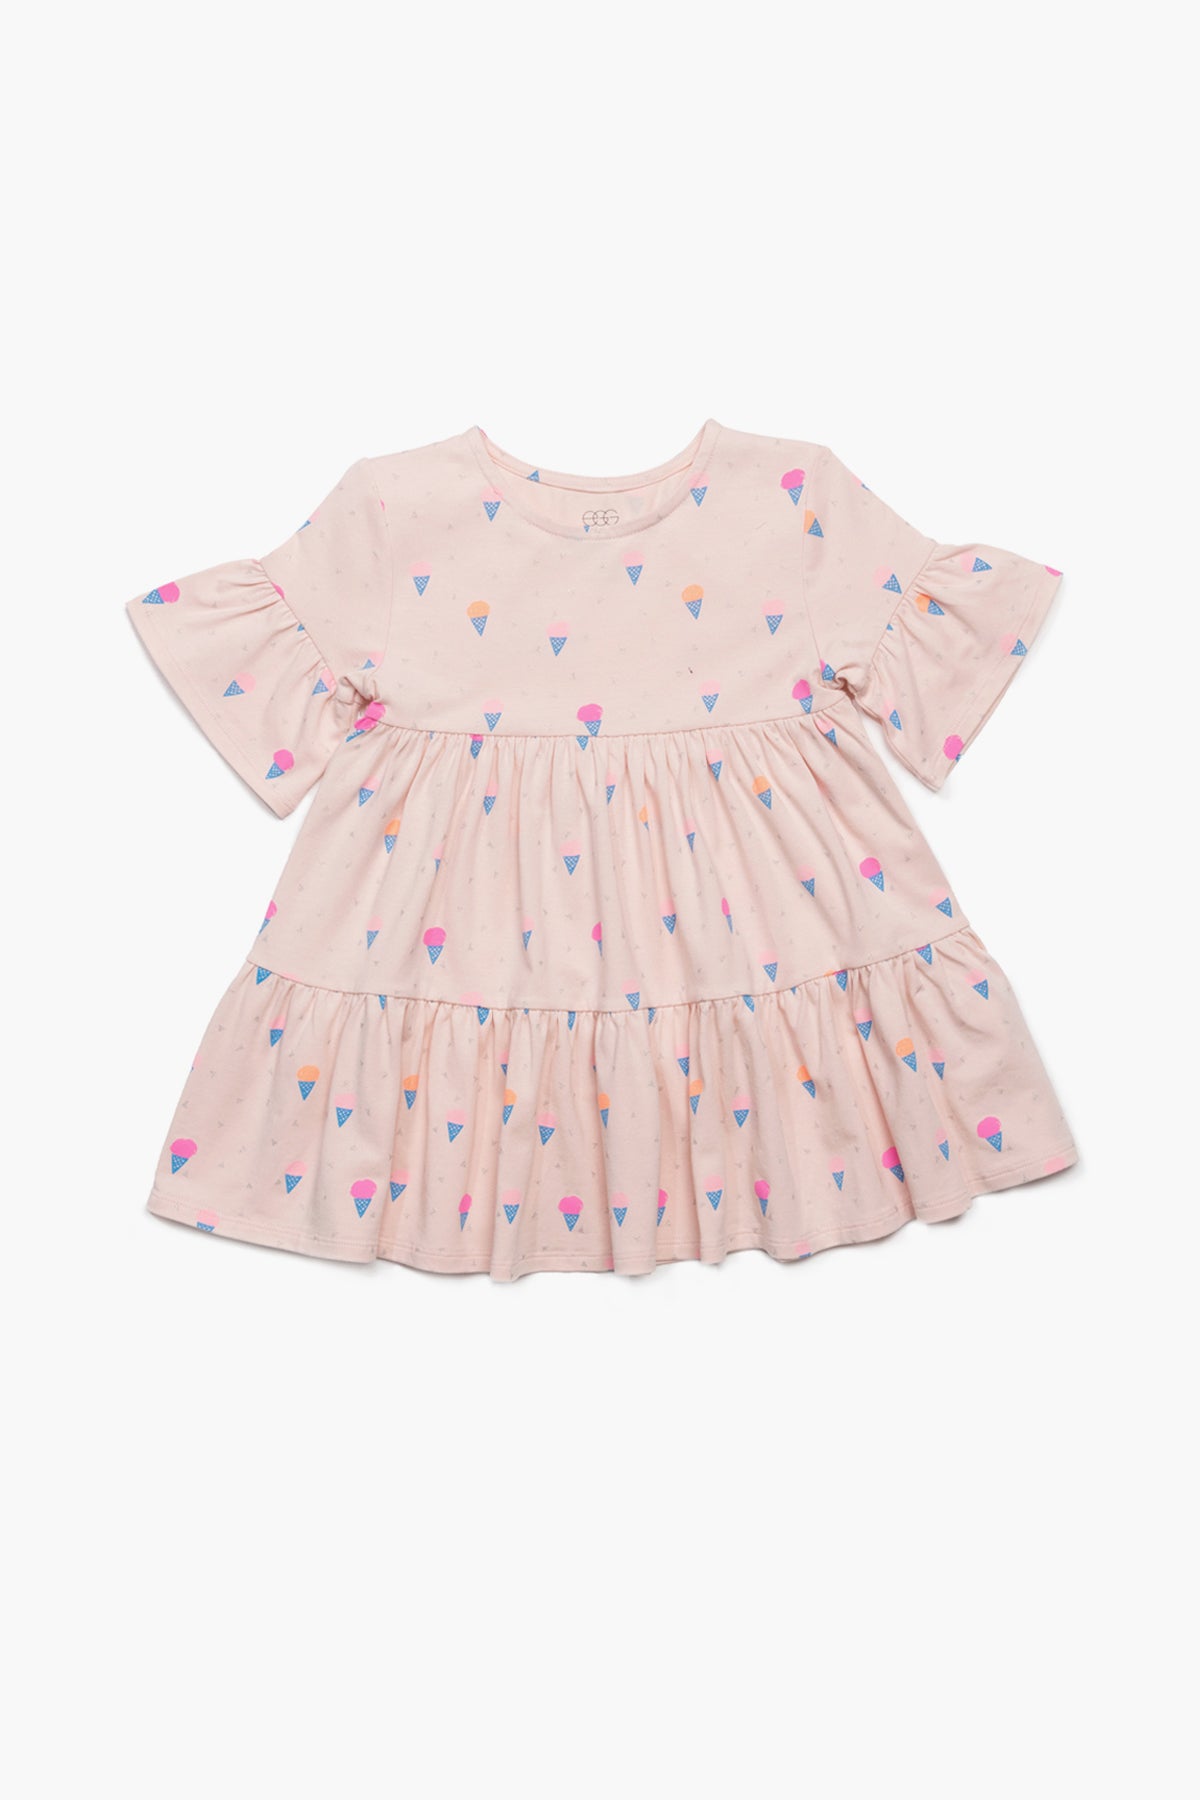 EGG New York Miranda Girls Dress - Blush (Size 12M left) – Mini Ruby